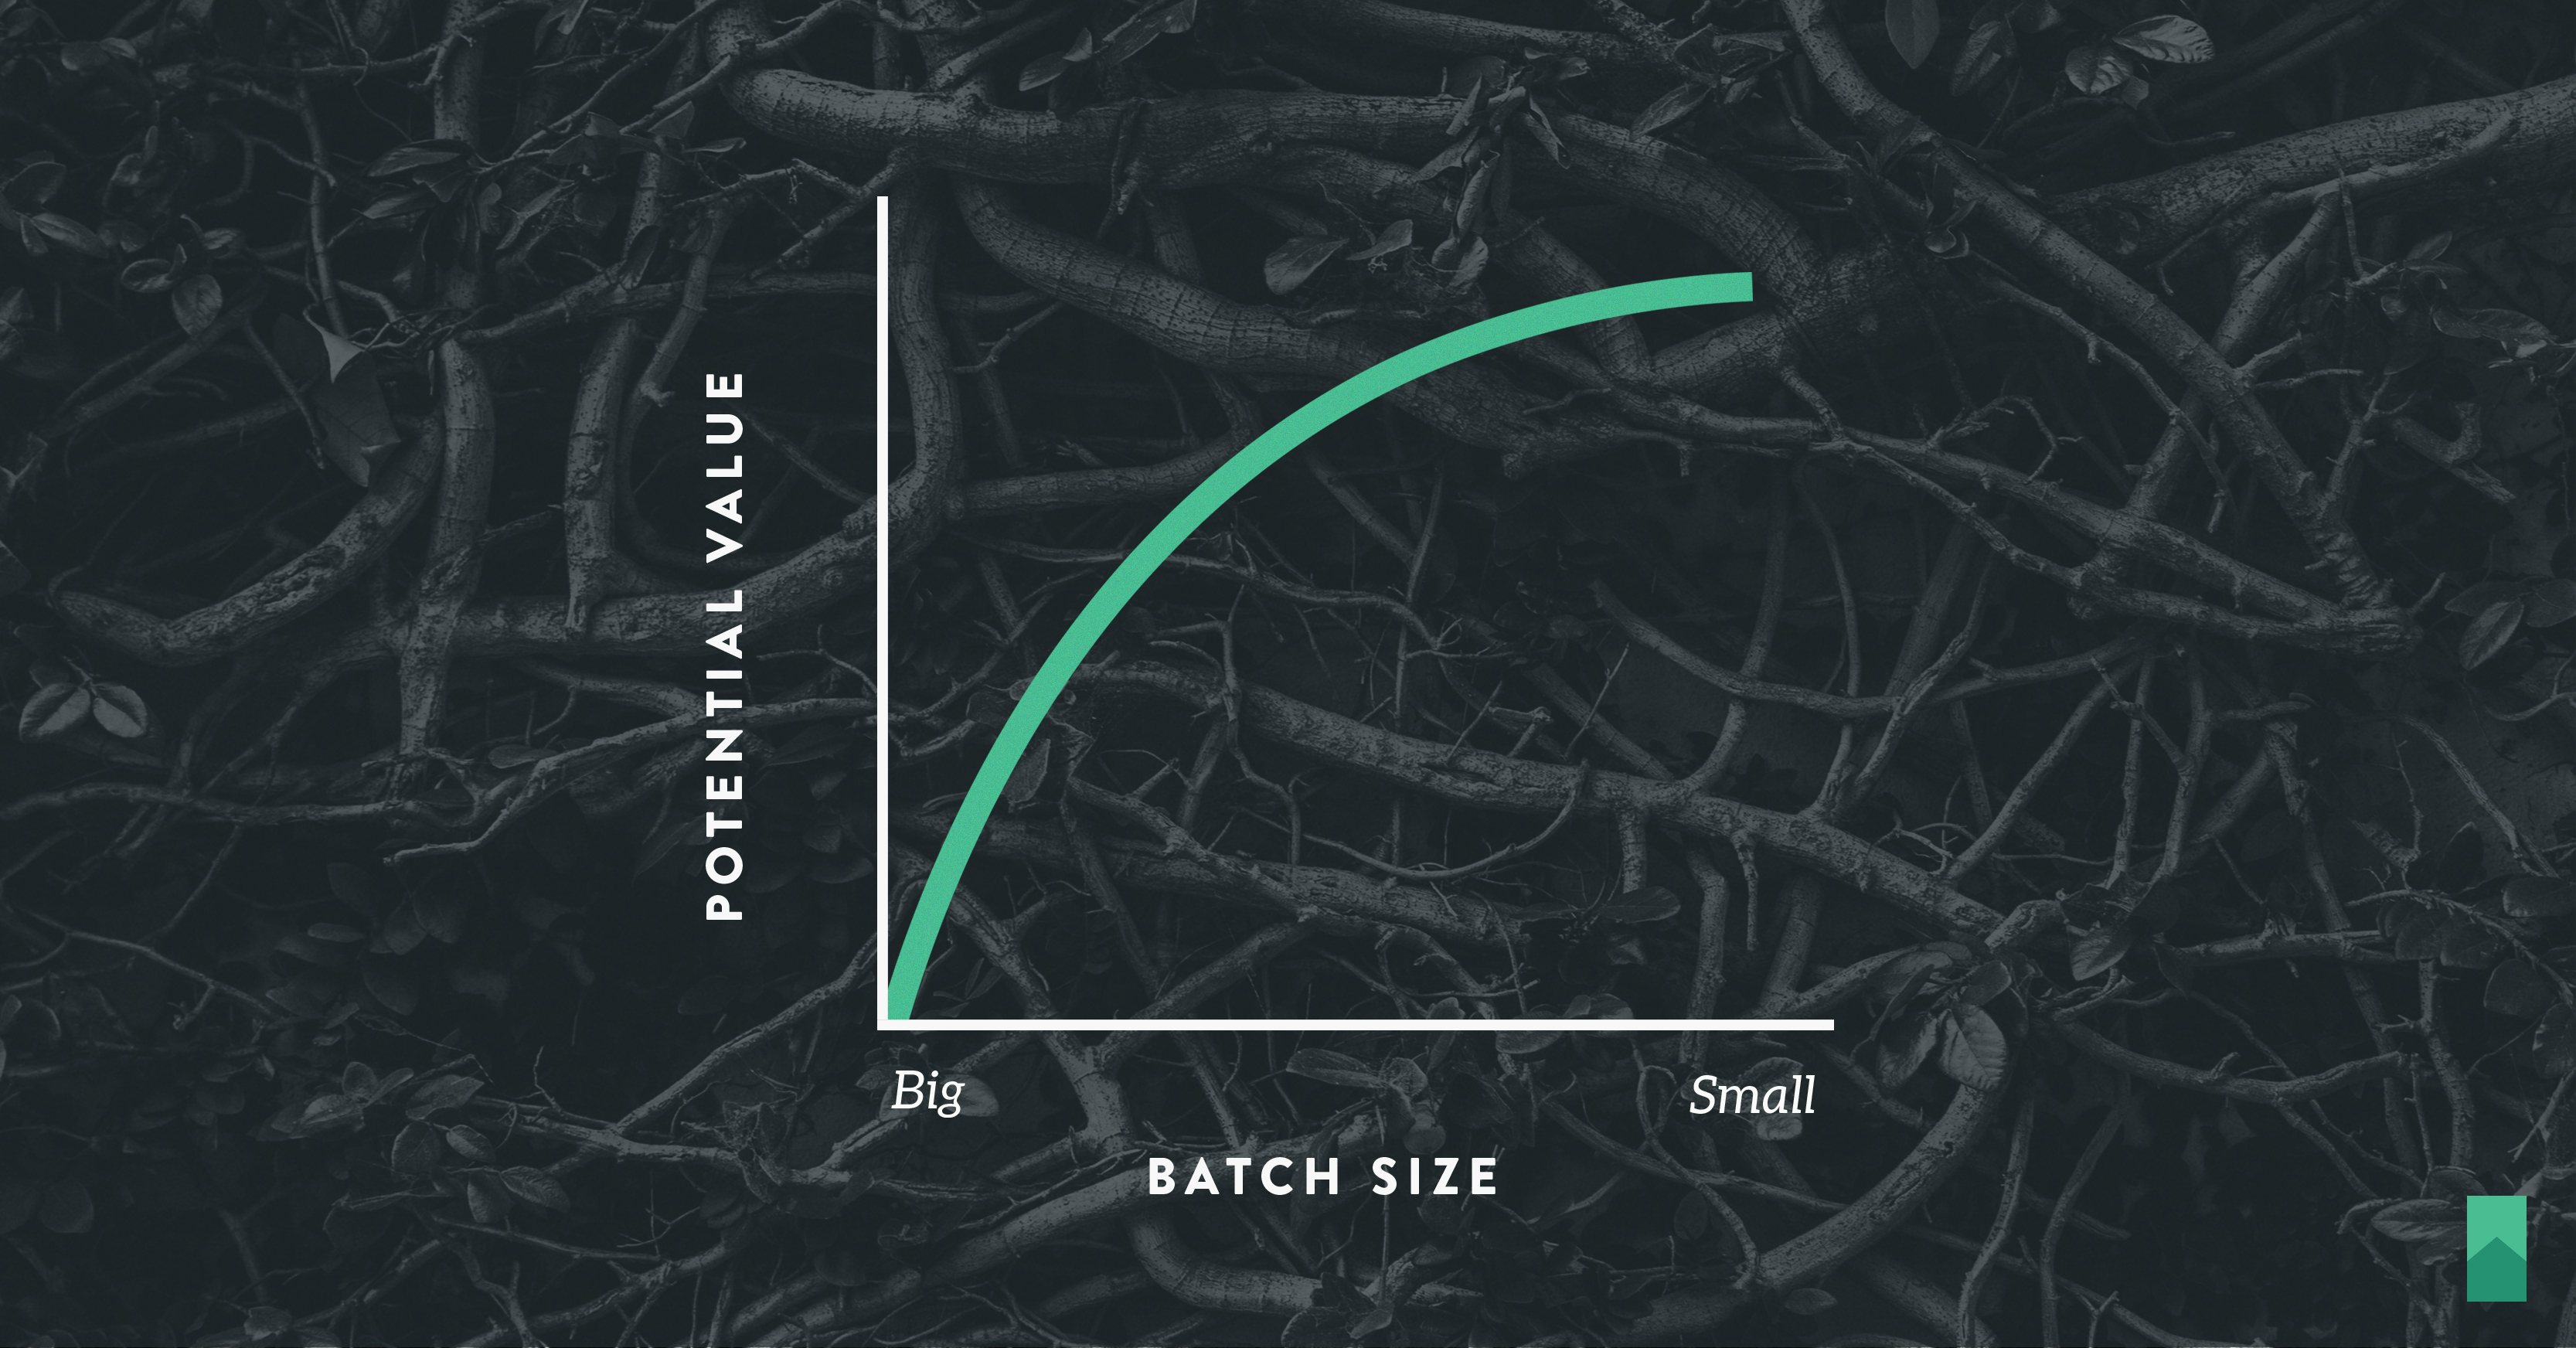 Smaller Batches Increase Value Potential